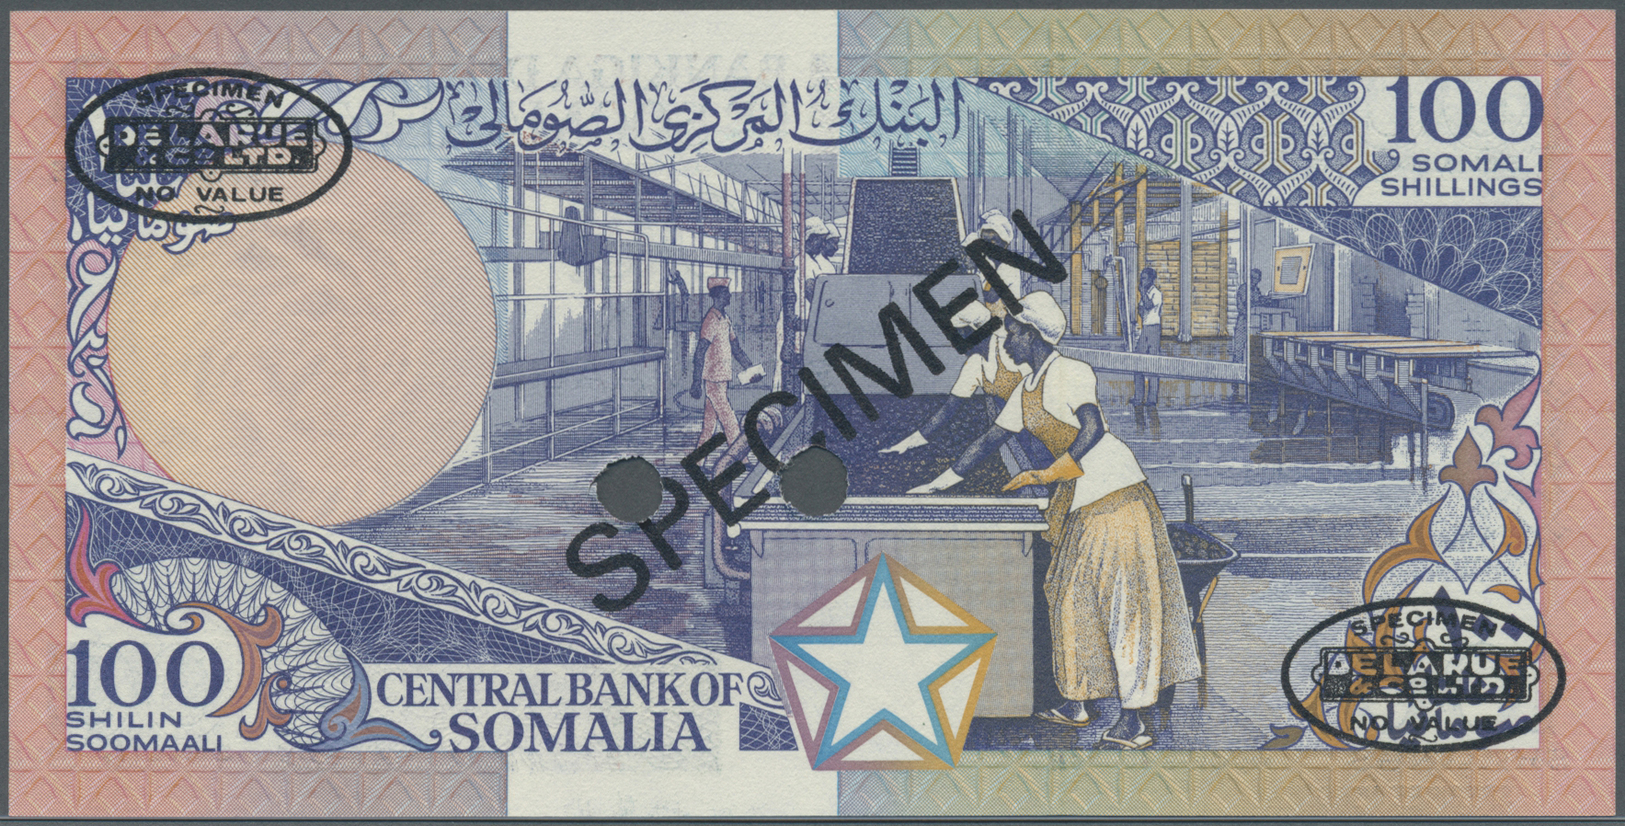 02941 Somalia: 100 Shillings 1983 Specimen P. 35as In Condition: UNC. - Somalie